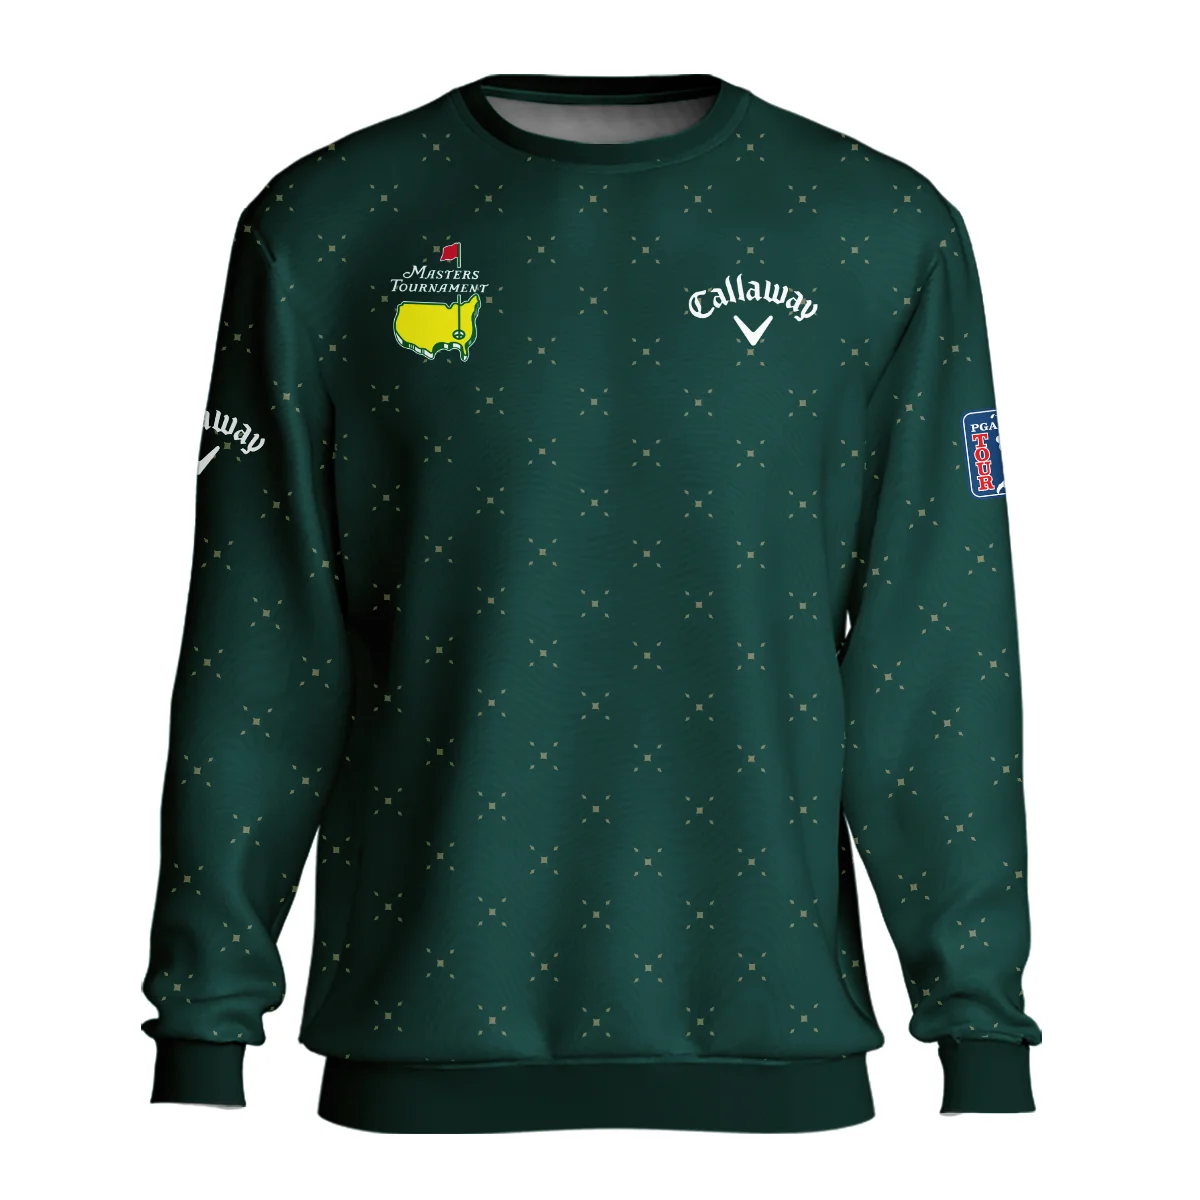 Diamond Shapes With Geometric Pattern Masters Tournament Callaway Unisex Sweatshirt Style Classic Sweatshirt